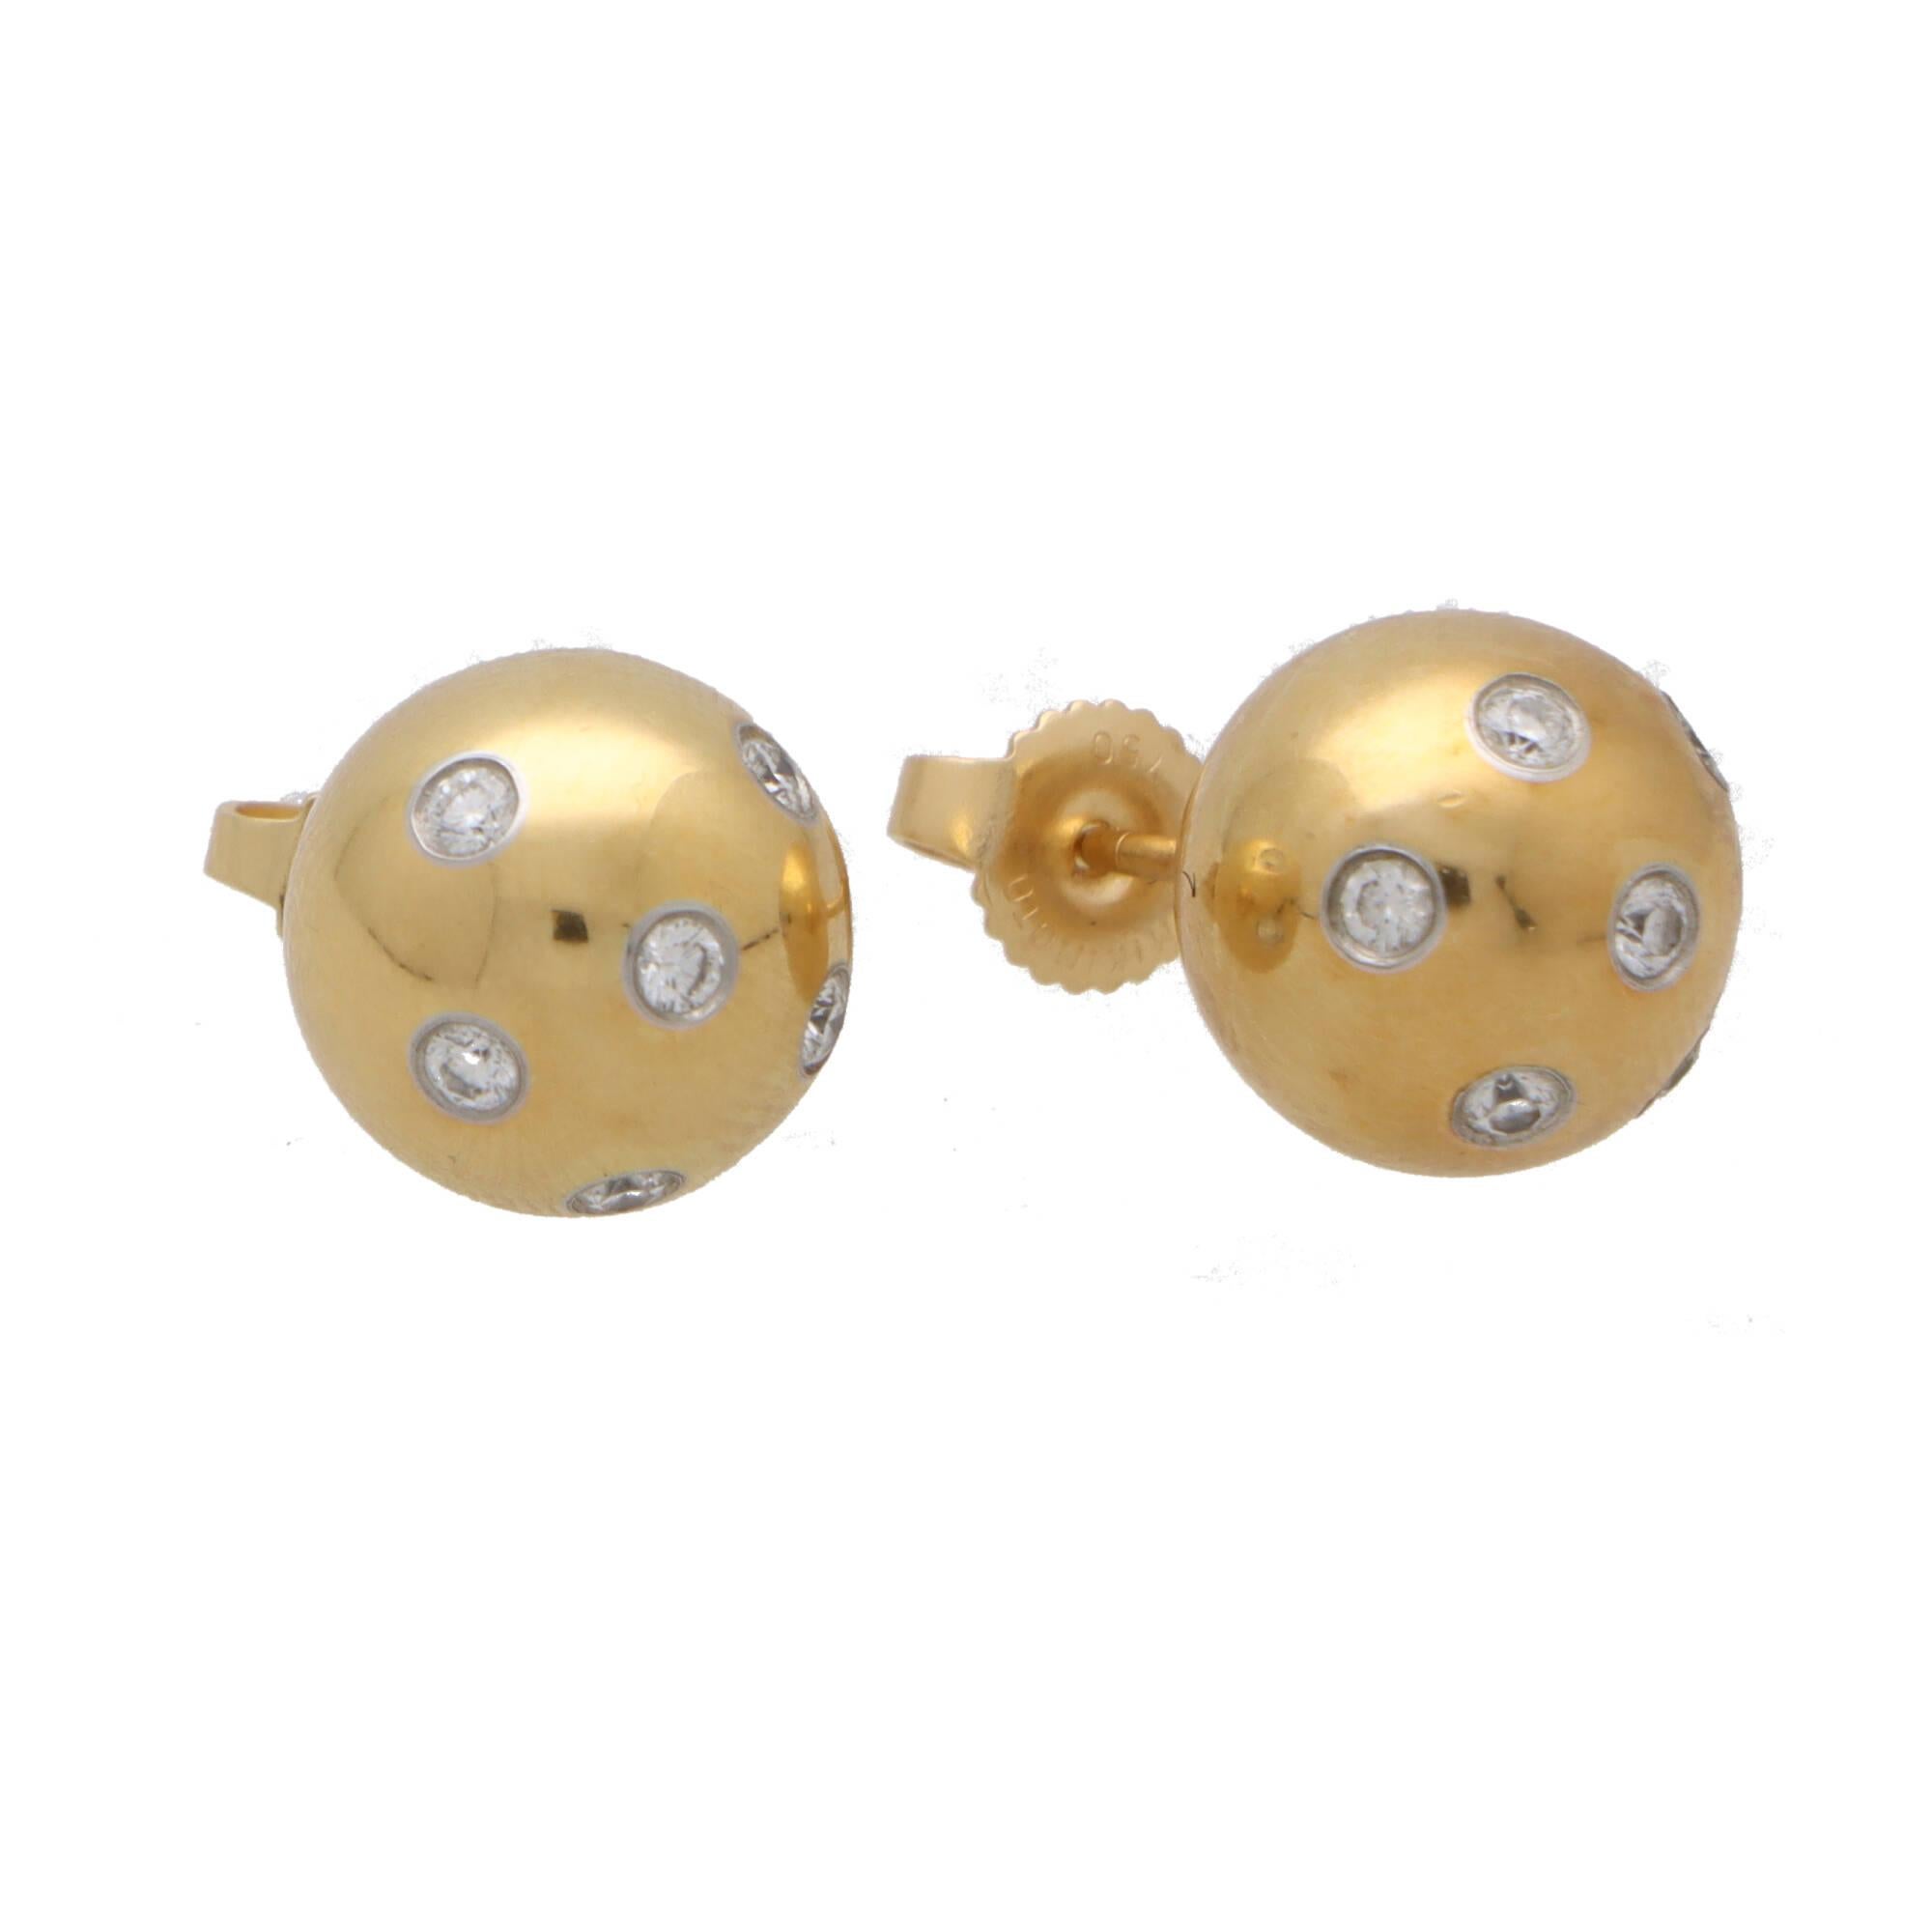 Modern Vintage Tiffany & Co. Etoile Diamond Ball Earrings in 18k Gold and Platinum